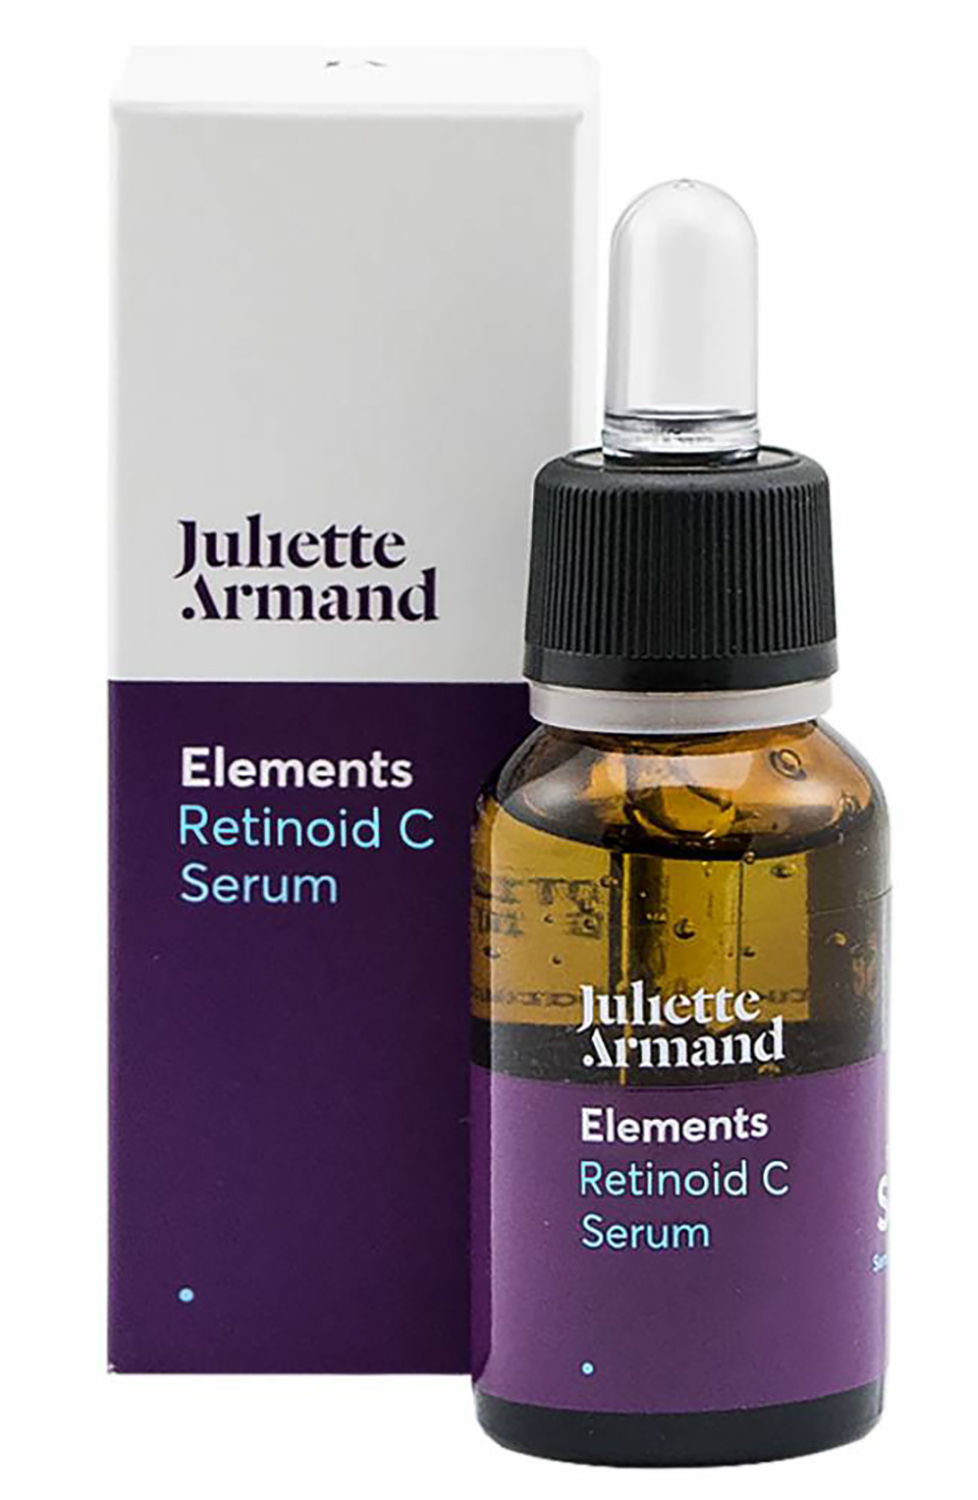 Juliette Armand Elements Retinoid C Serum